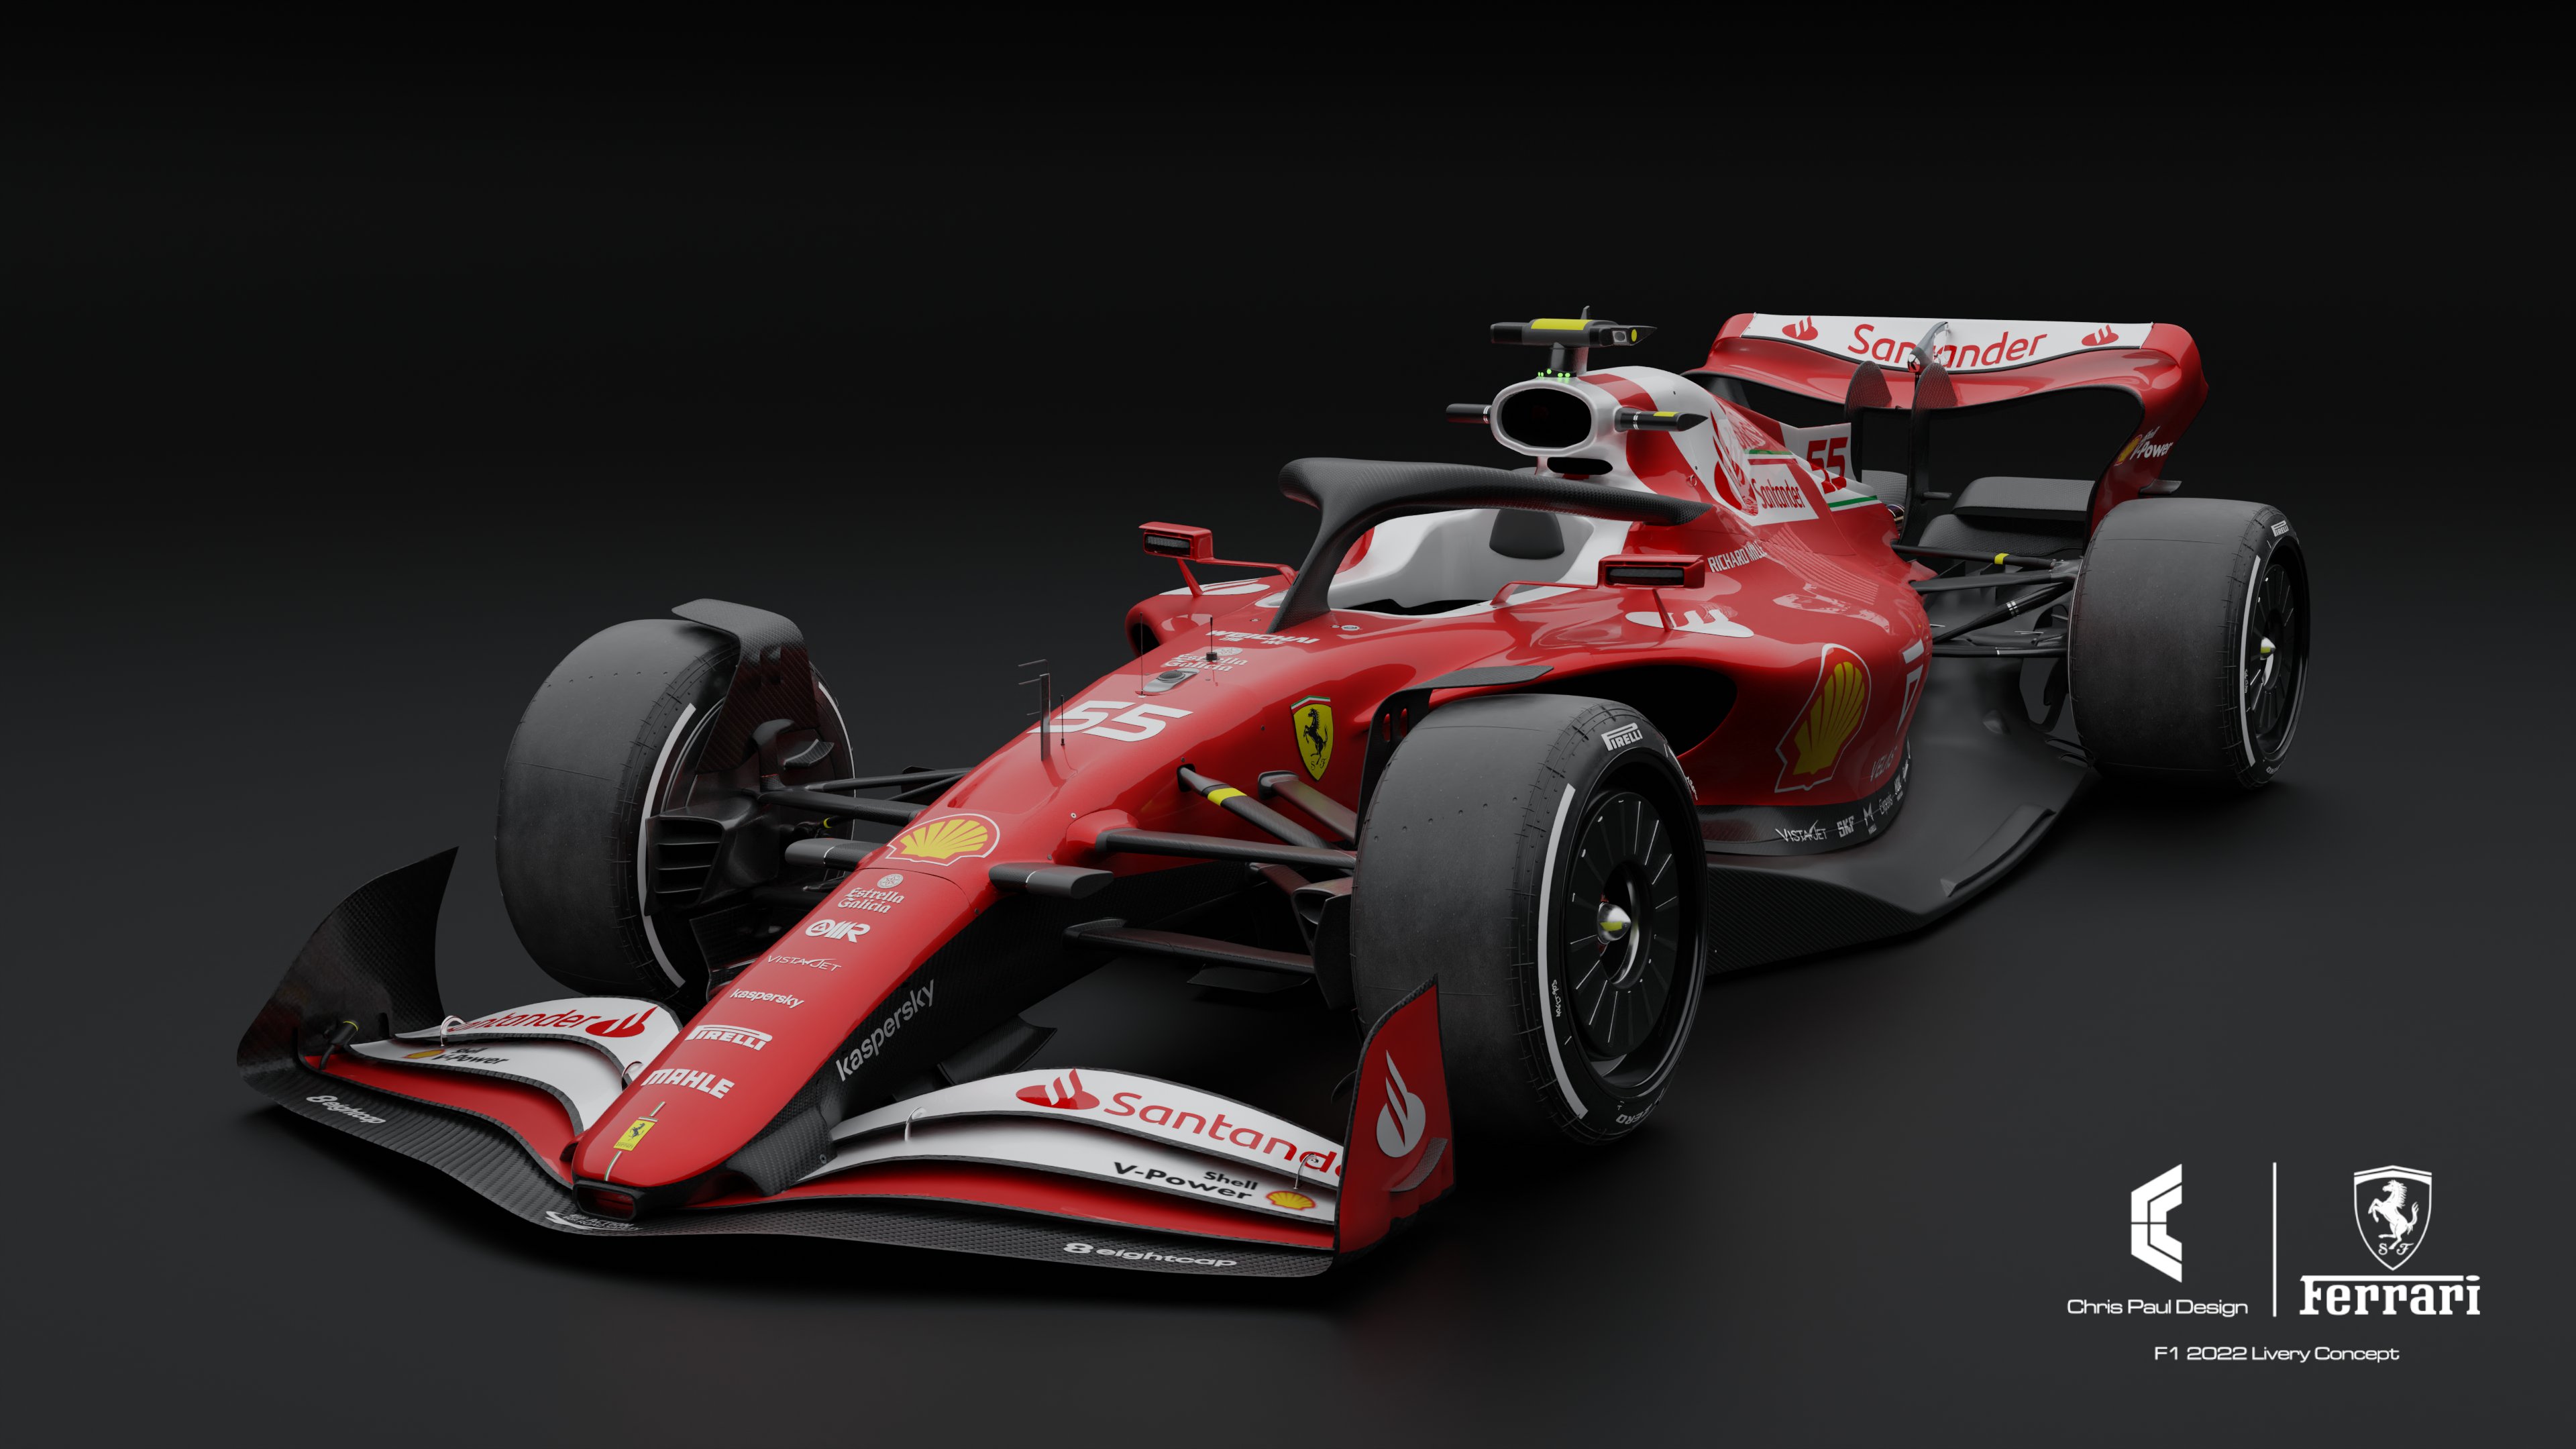 2022 Ferrari livery concept by Chris Paul Design